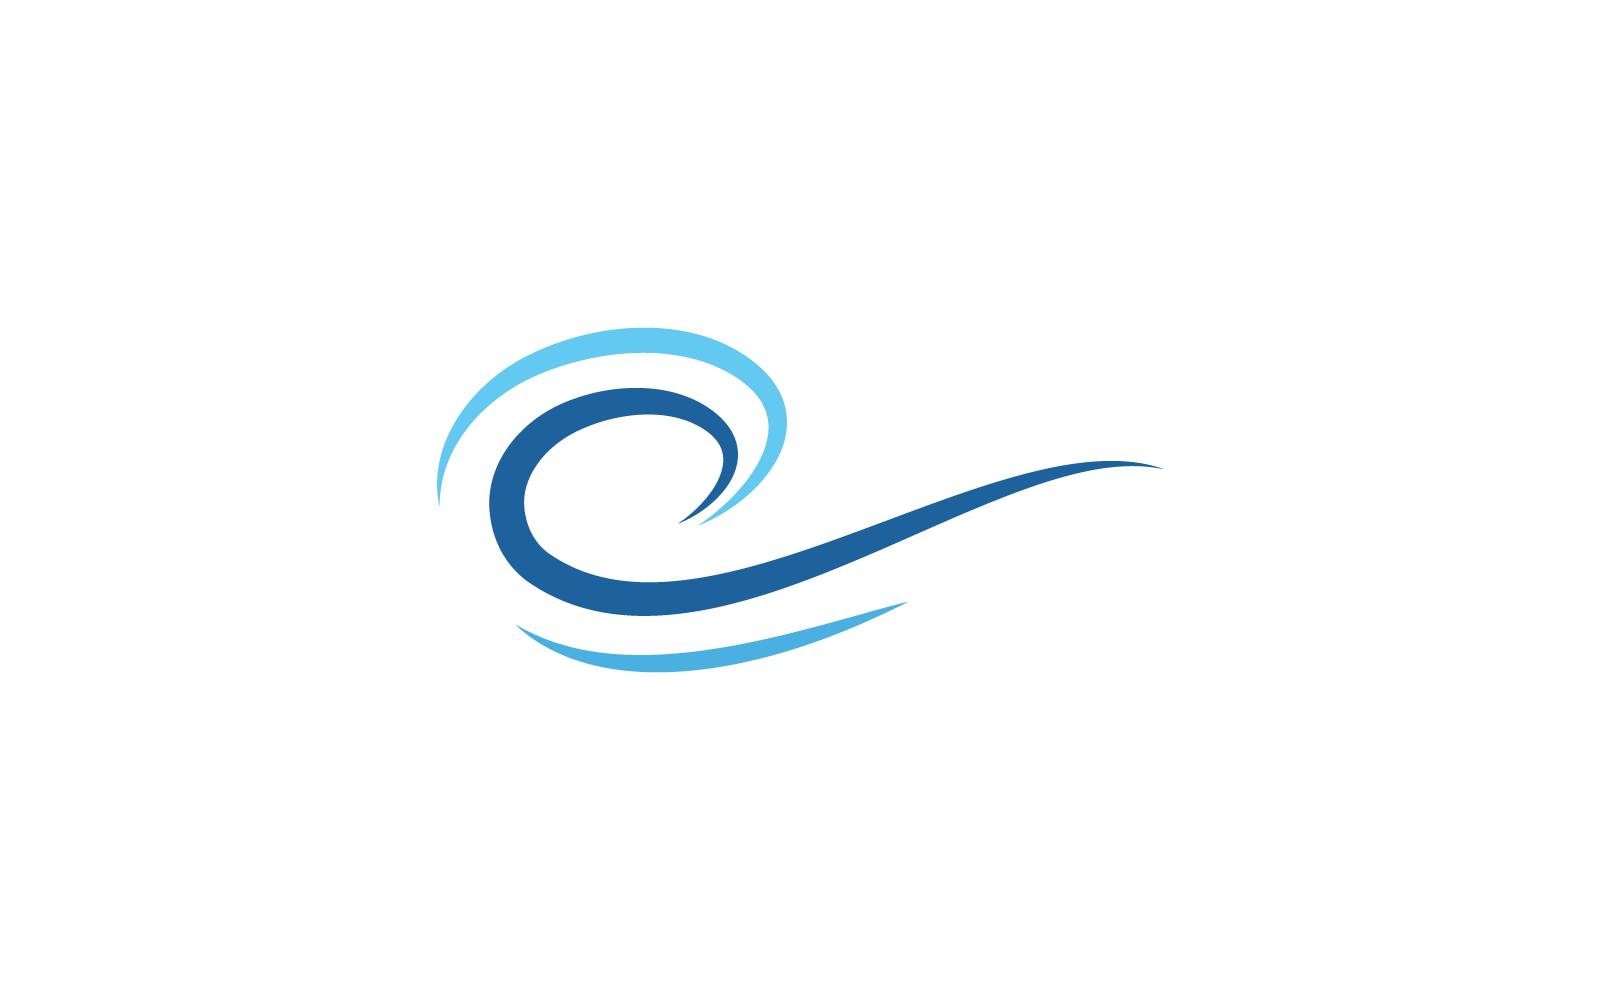 Water Wave illustration logo template vector flat design